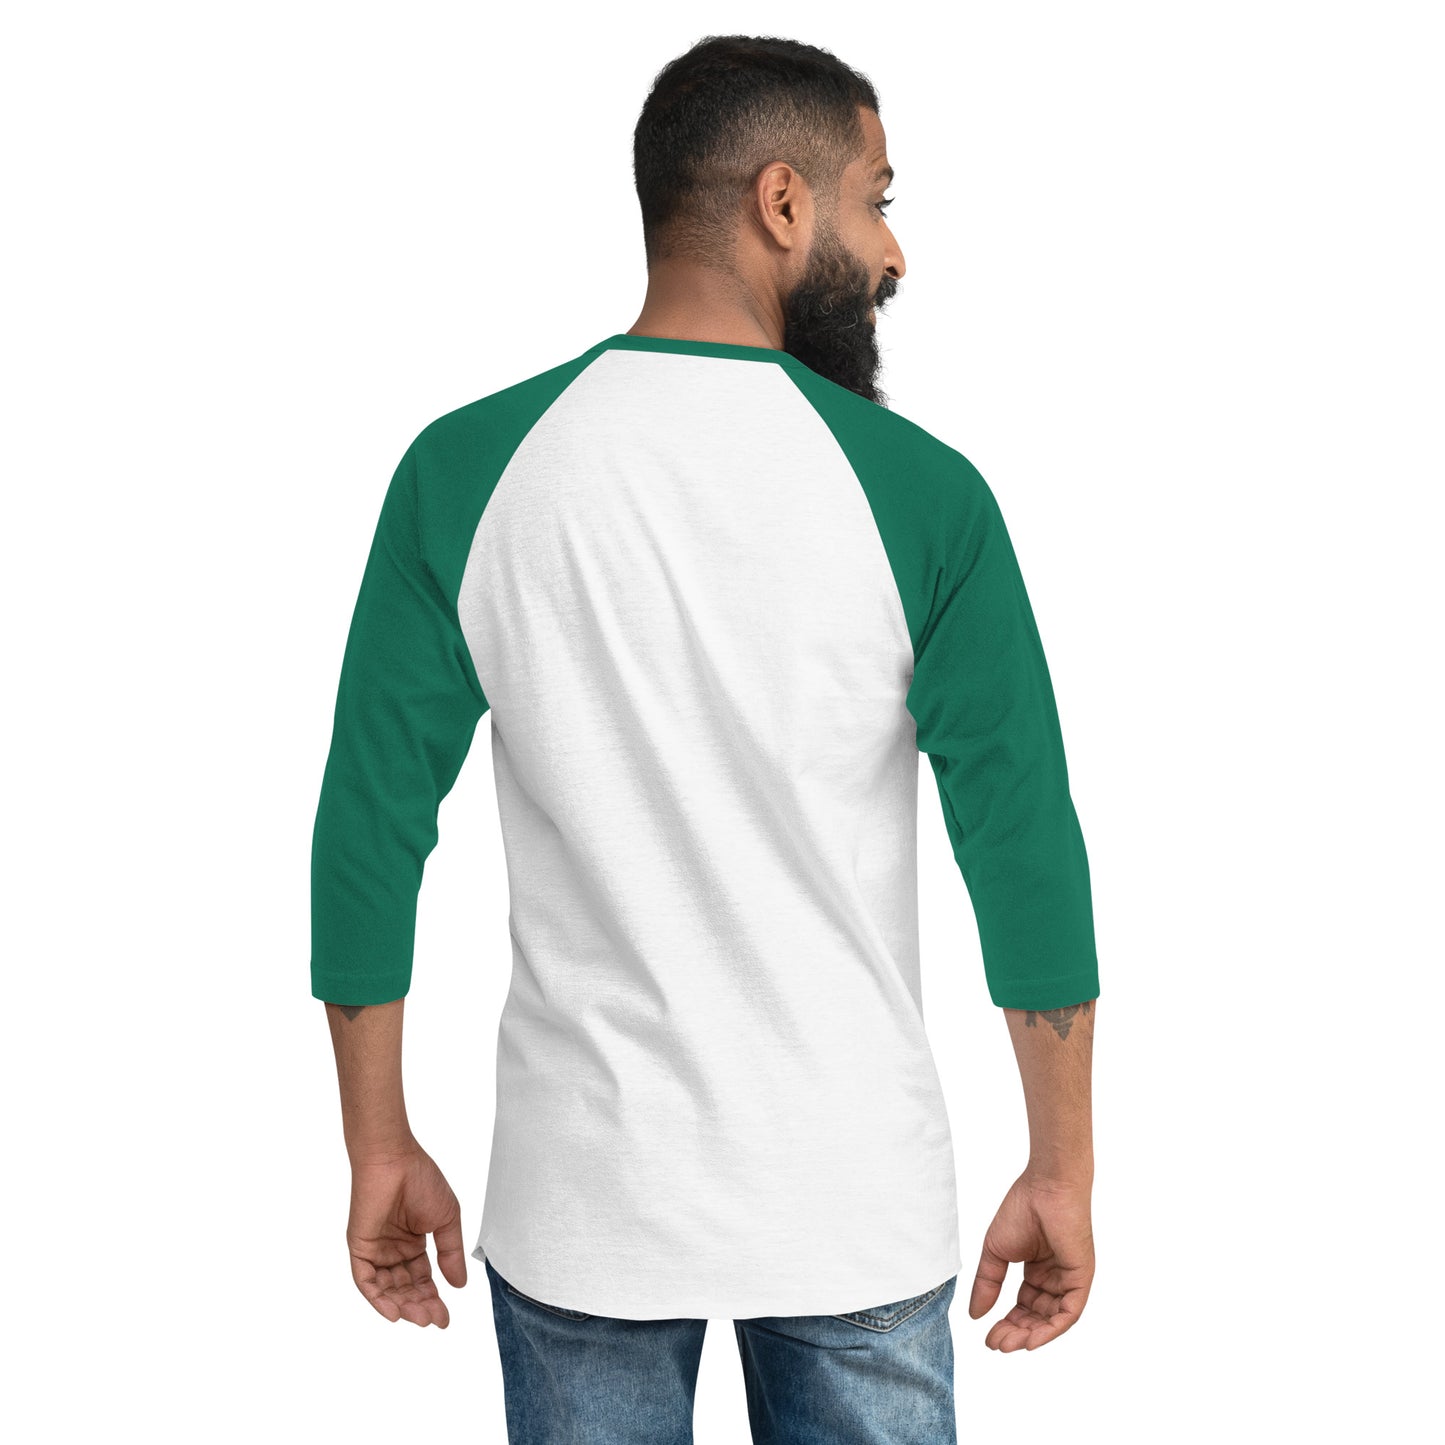 “+2 Wisdom” 3/4 sleeve raglan shirt